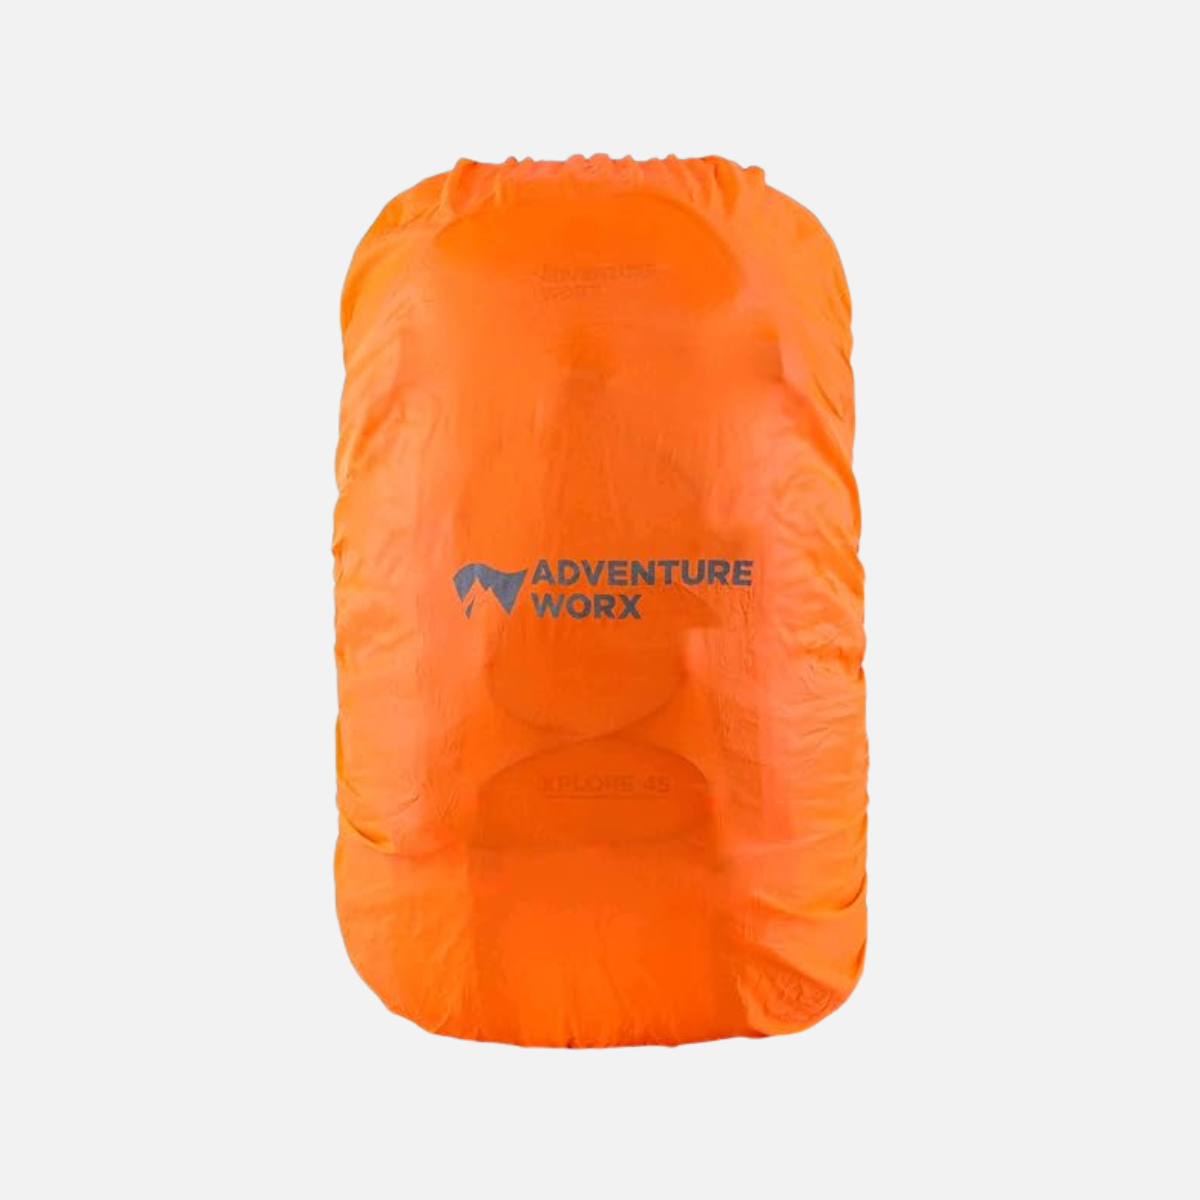 Adventure Worx Xplore 45 L Camping Backpack - Oak/Grey